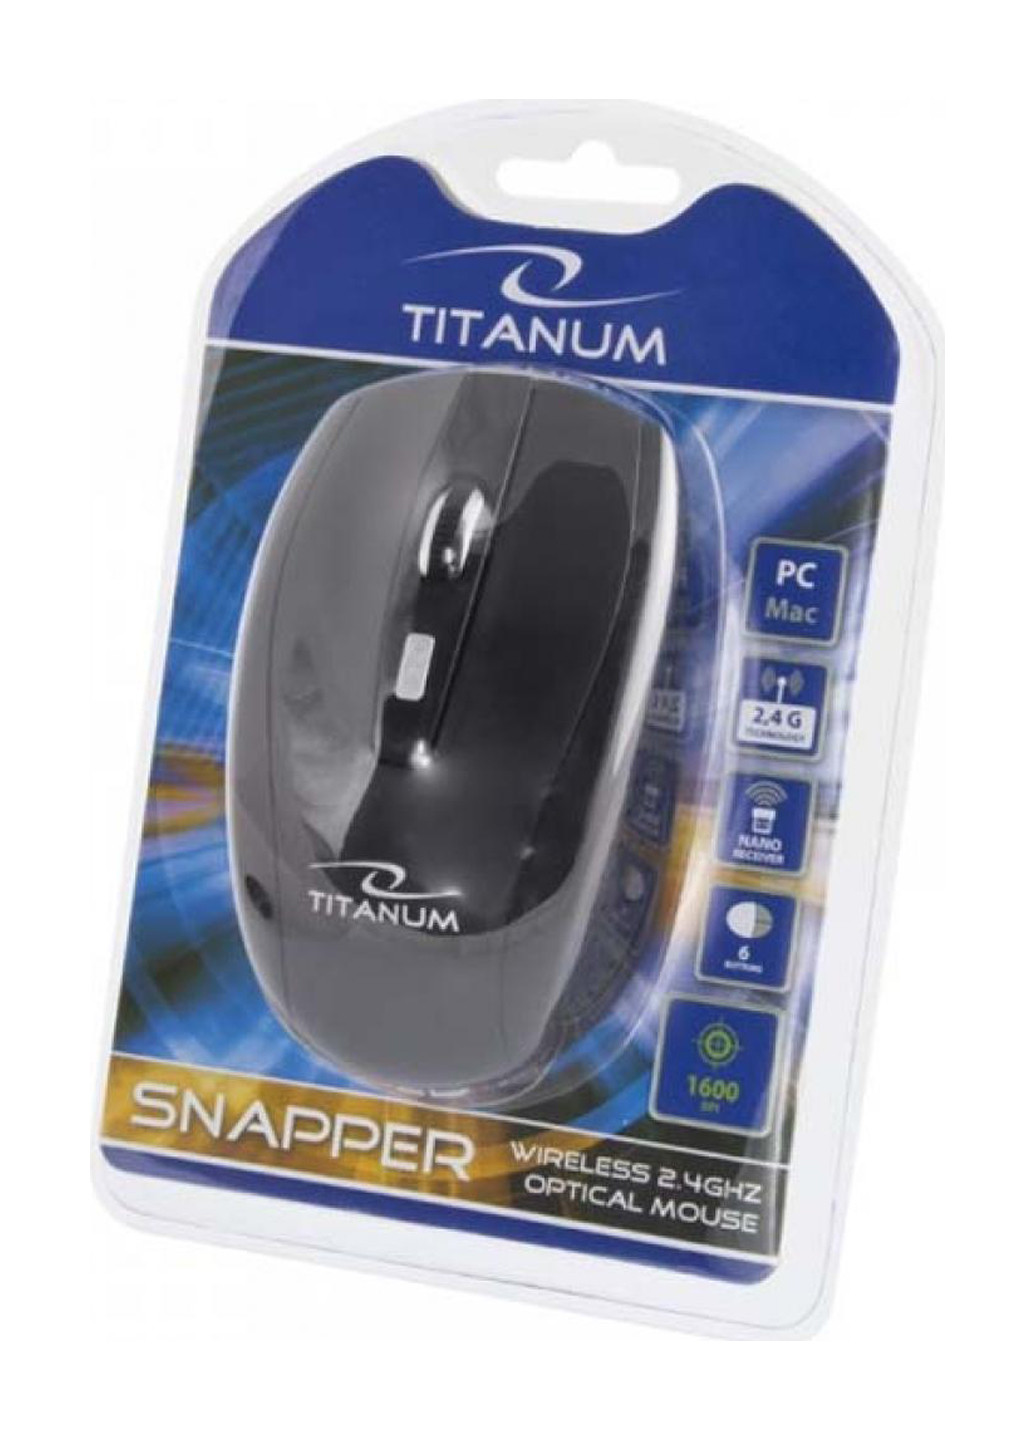 Миша бездротова Esperanza titanum mouse tm105k black (tm105k) (137173181)